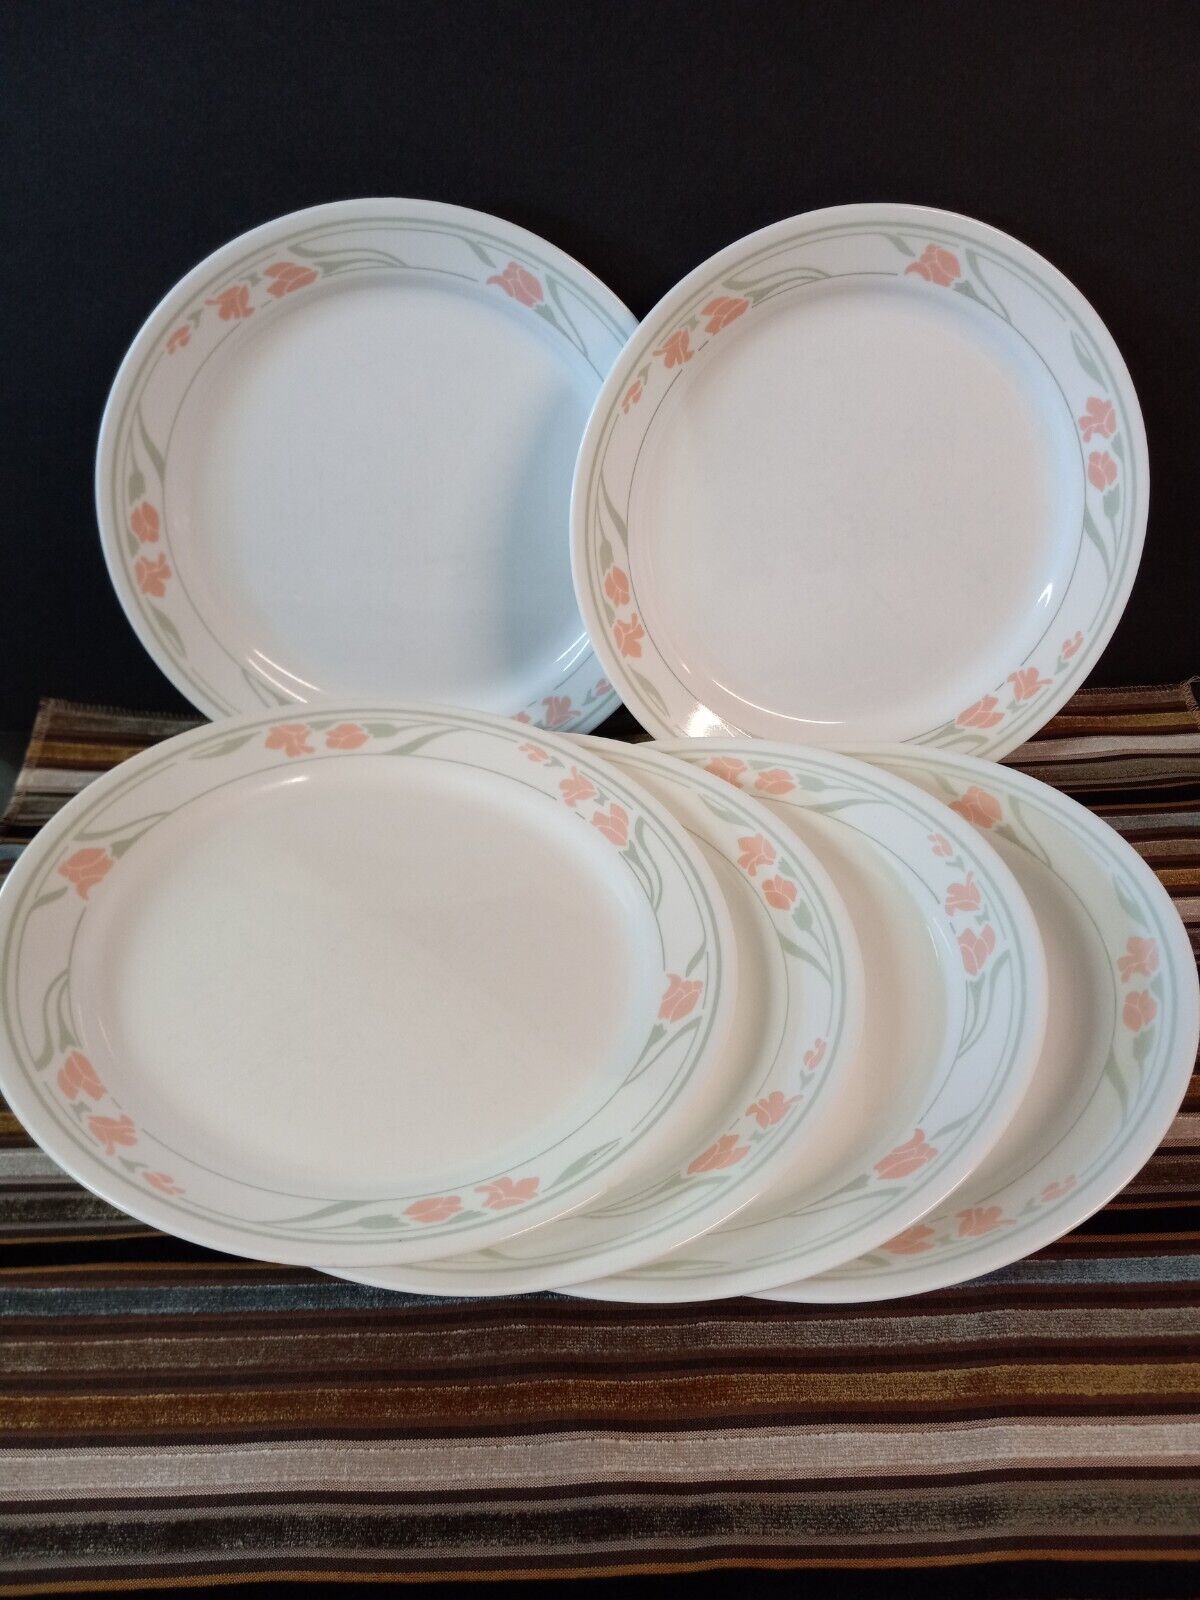 5 Vintage Corelle Peach Garland Dinner Plates 10 1/4" Corning Ware Made USA